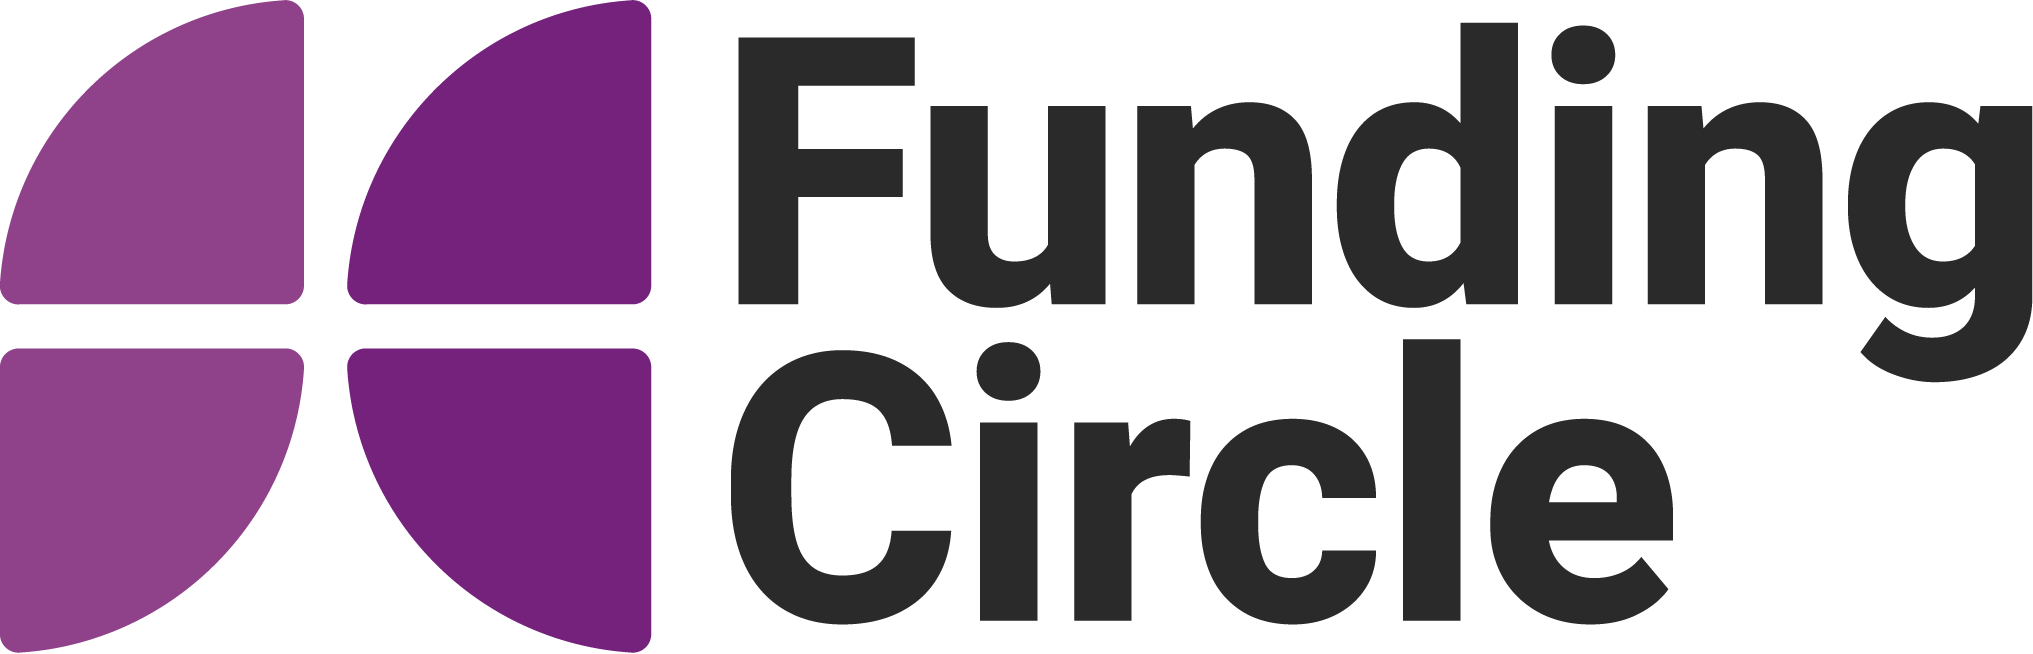 Erfahrungen Funding Circle